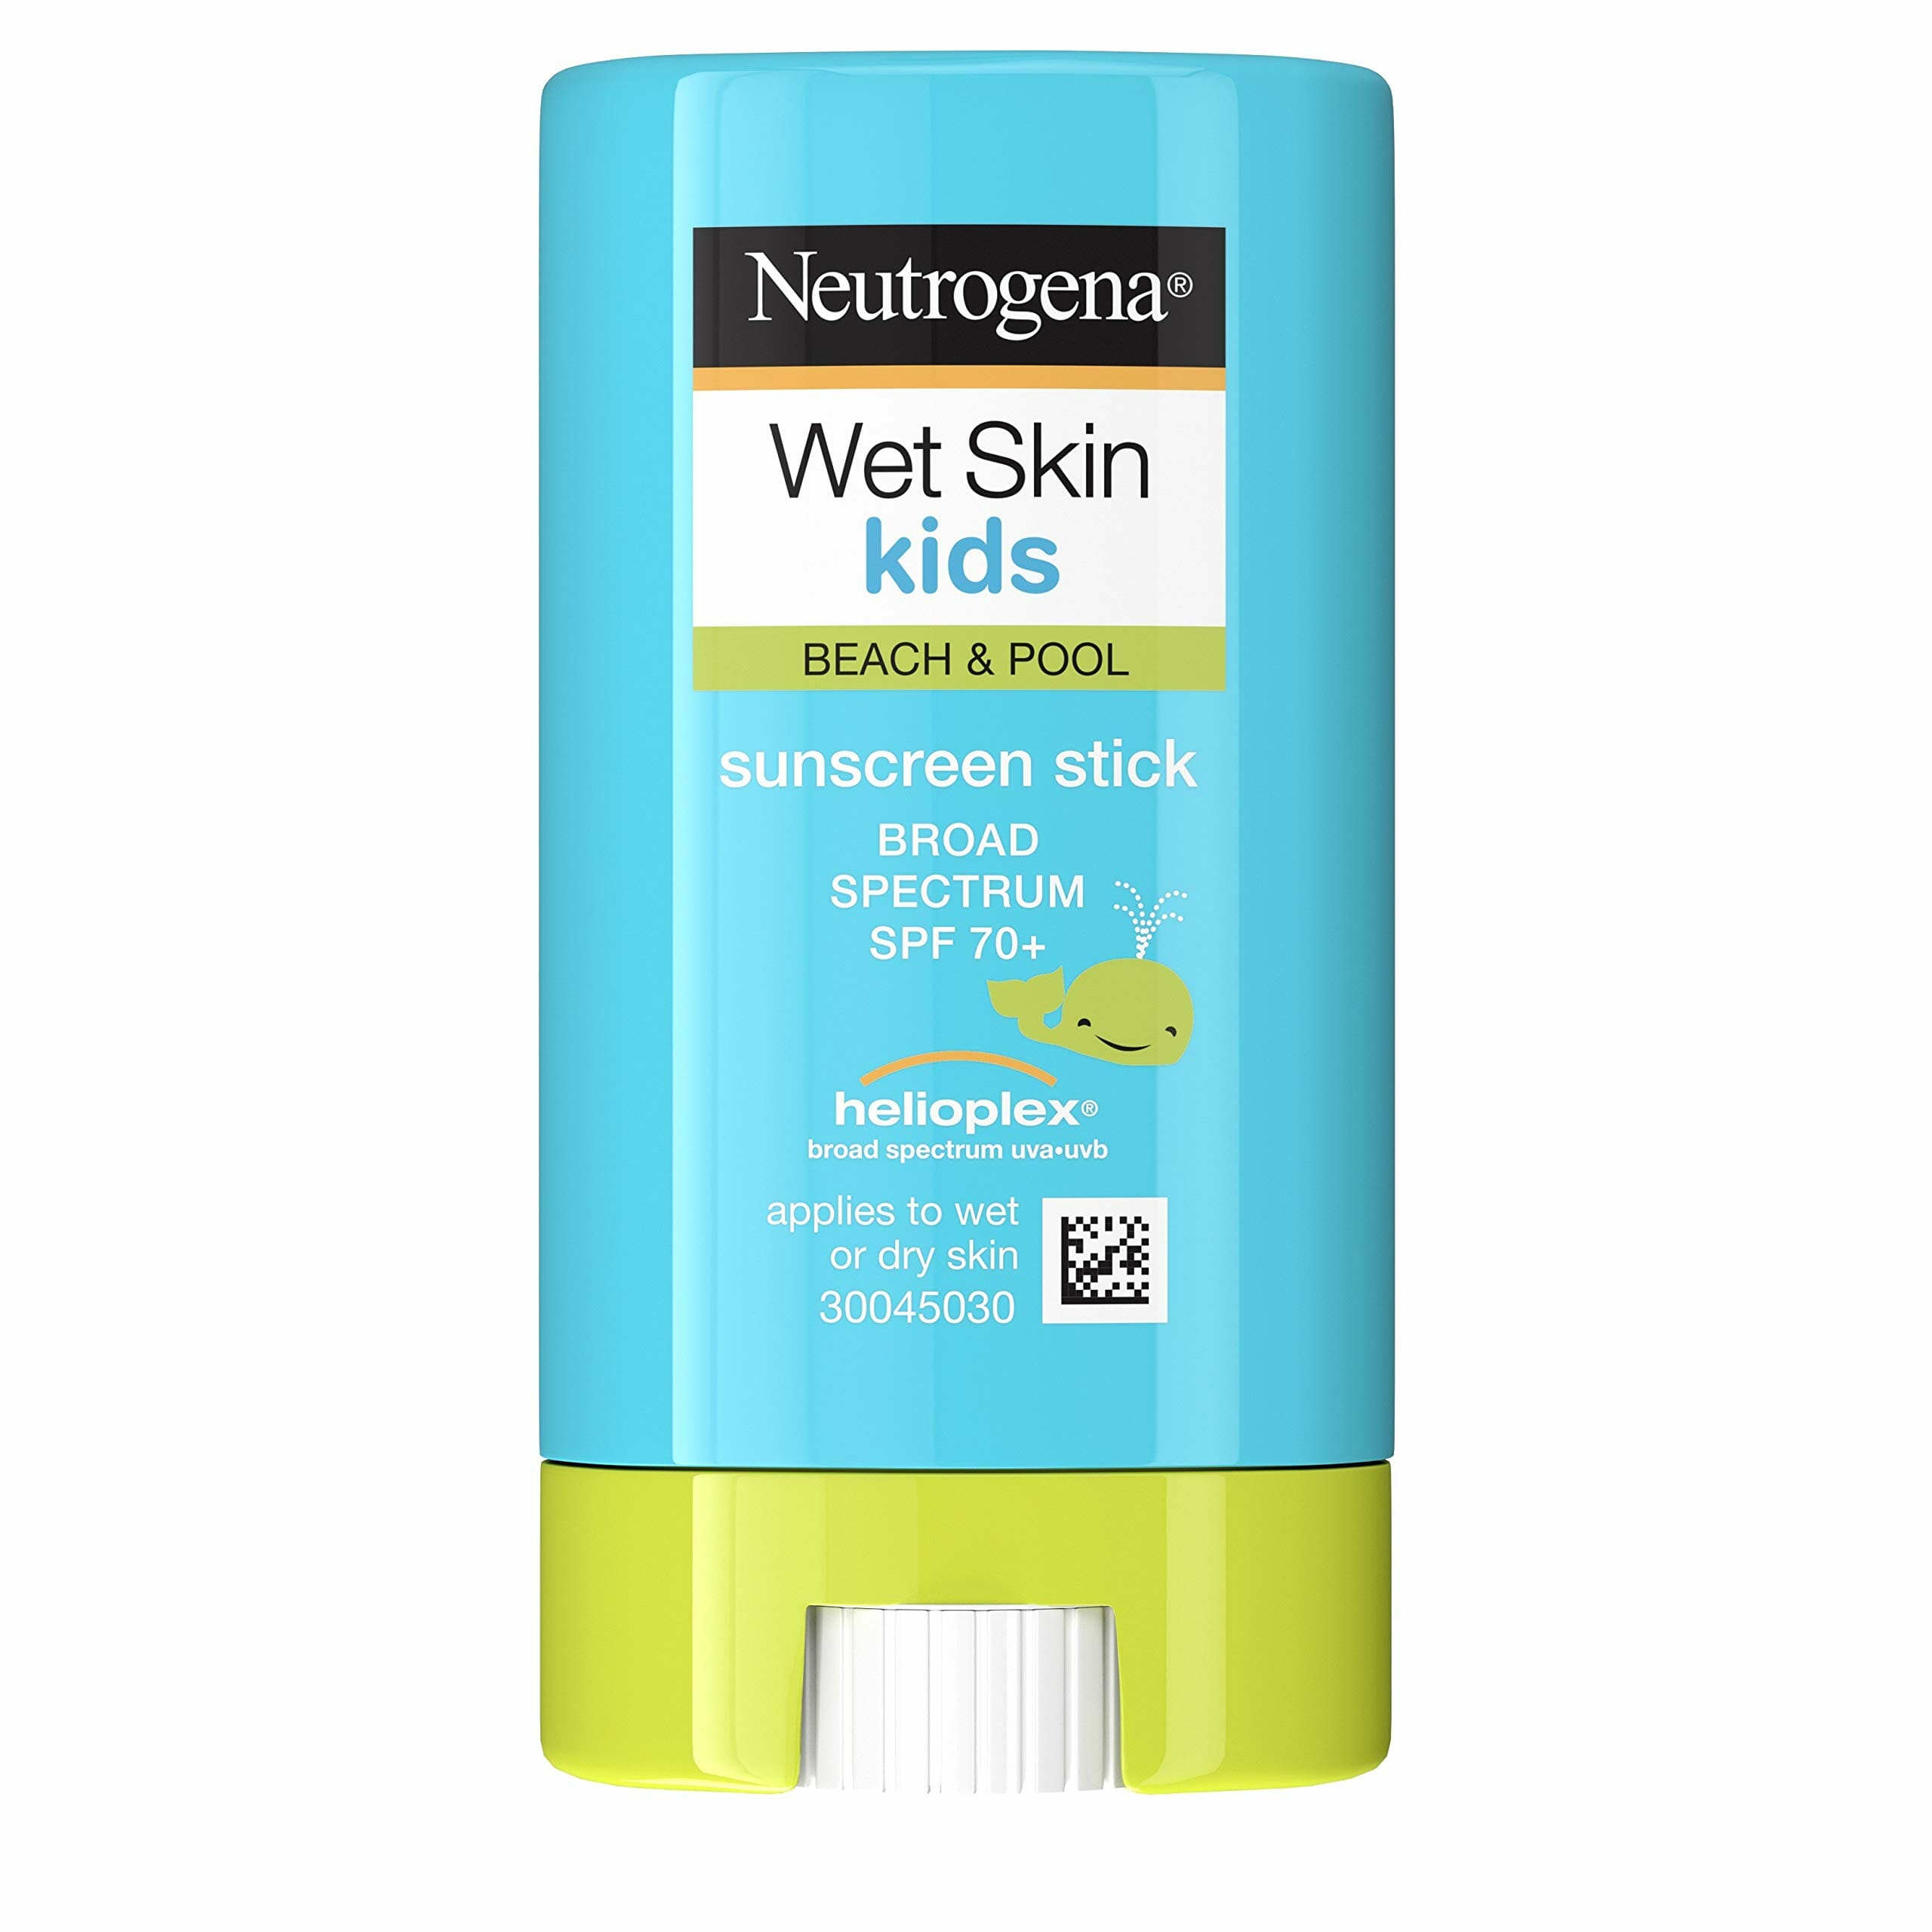 Neutrogena Wet Skin Kids Sunscreen Stick